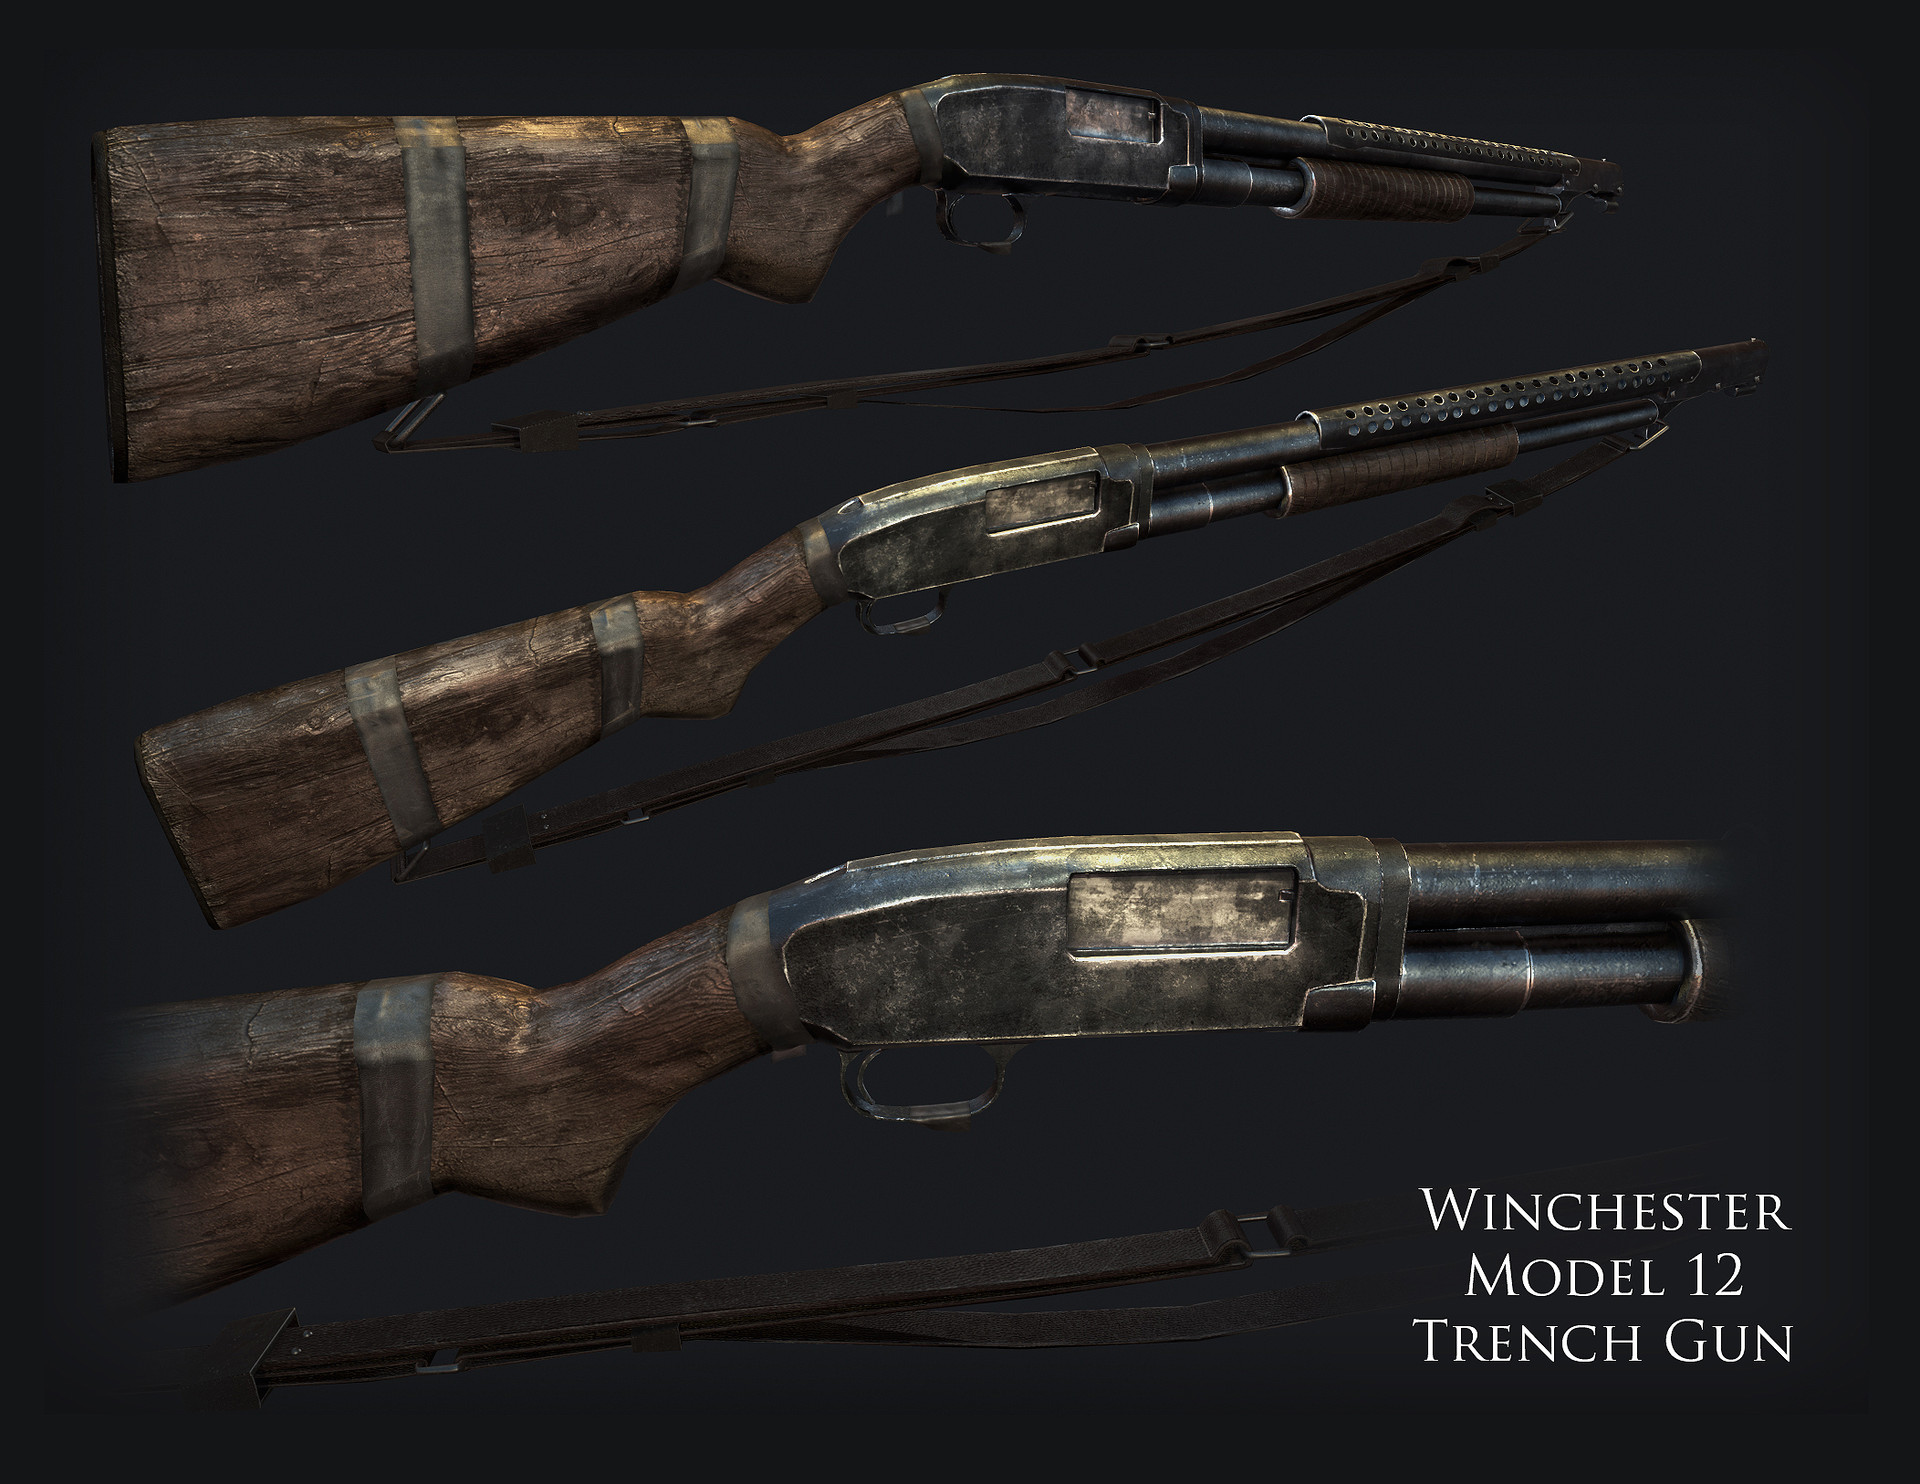 Worn Winchester Model 12 Trench Gun.